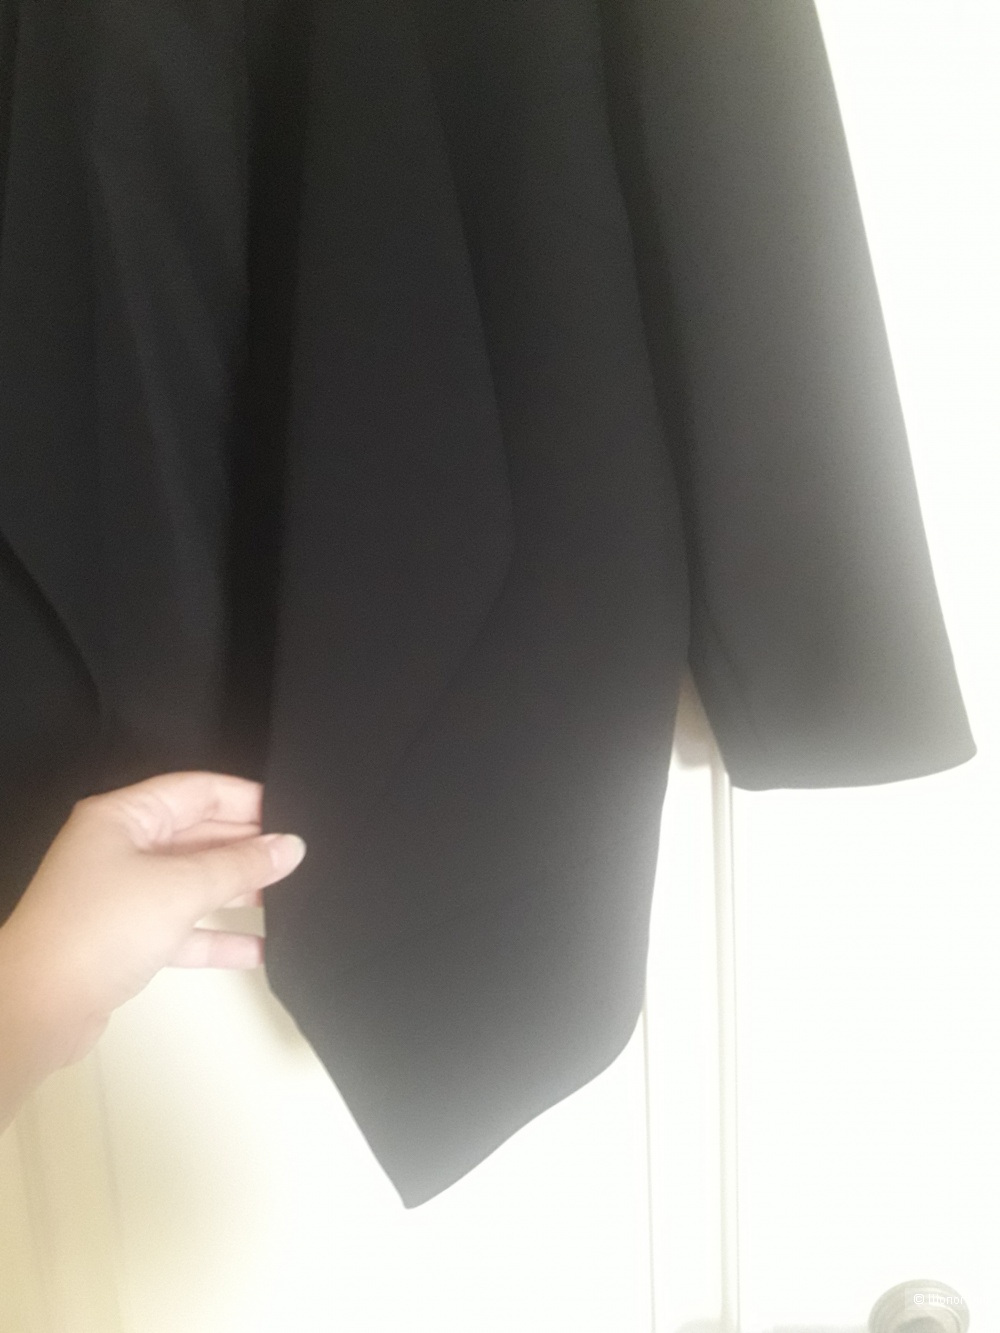 Пиджак  Zarina, 50 размер